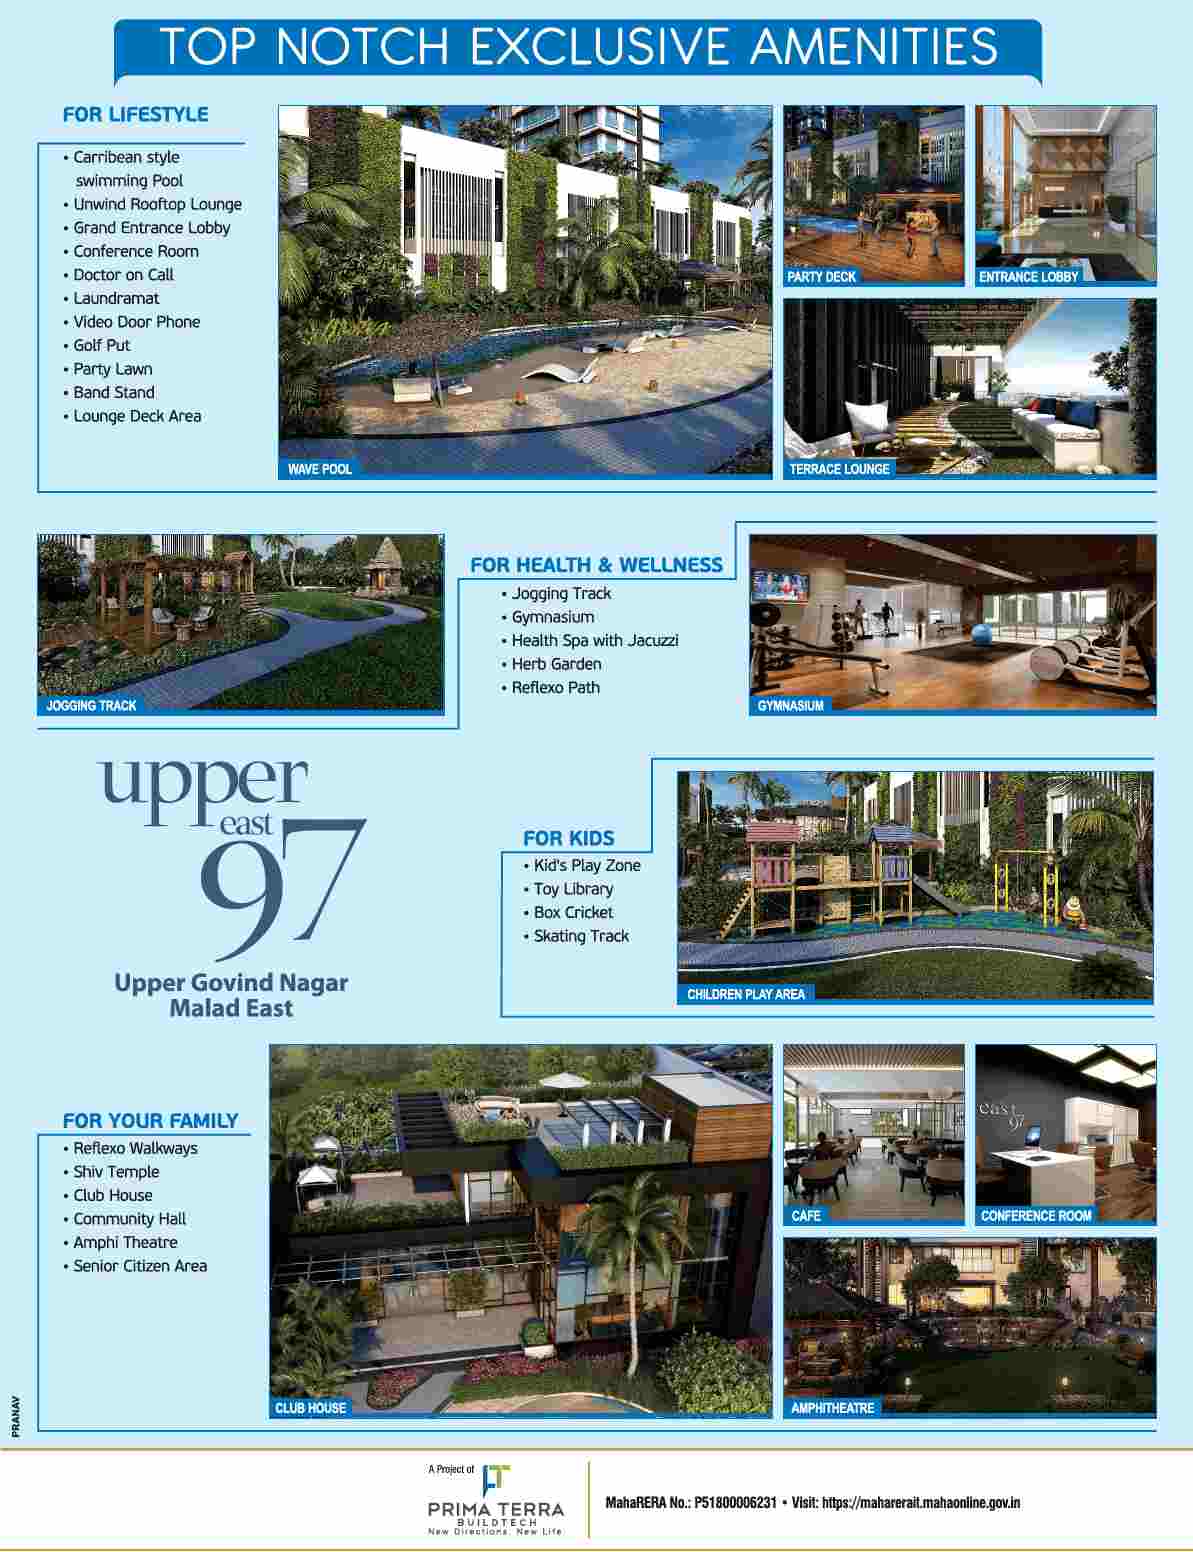 Enjoy top notch exclusive amenities at Prima Upper East 97 in Mumbai